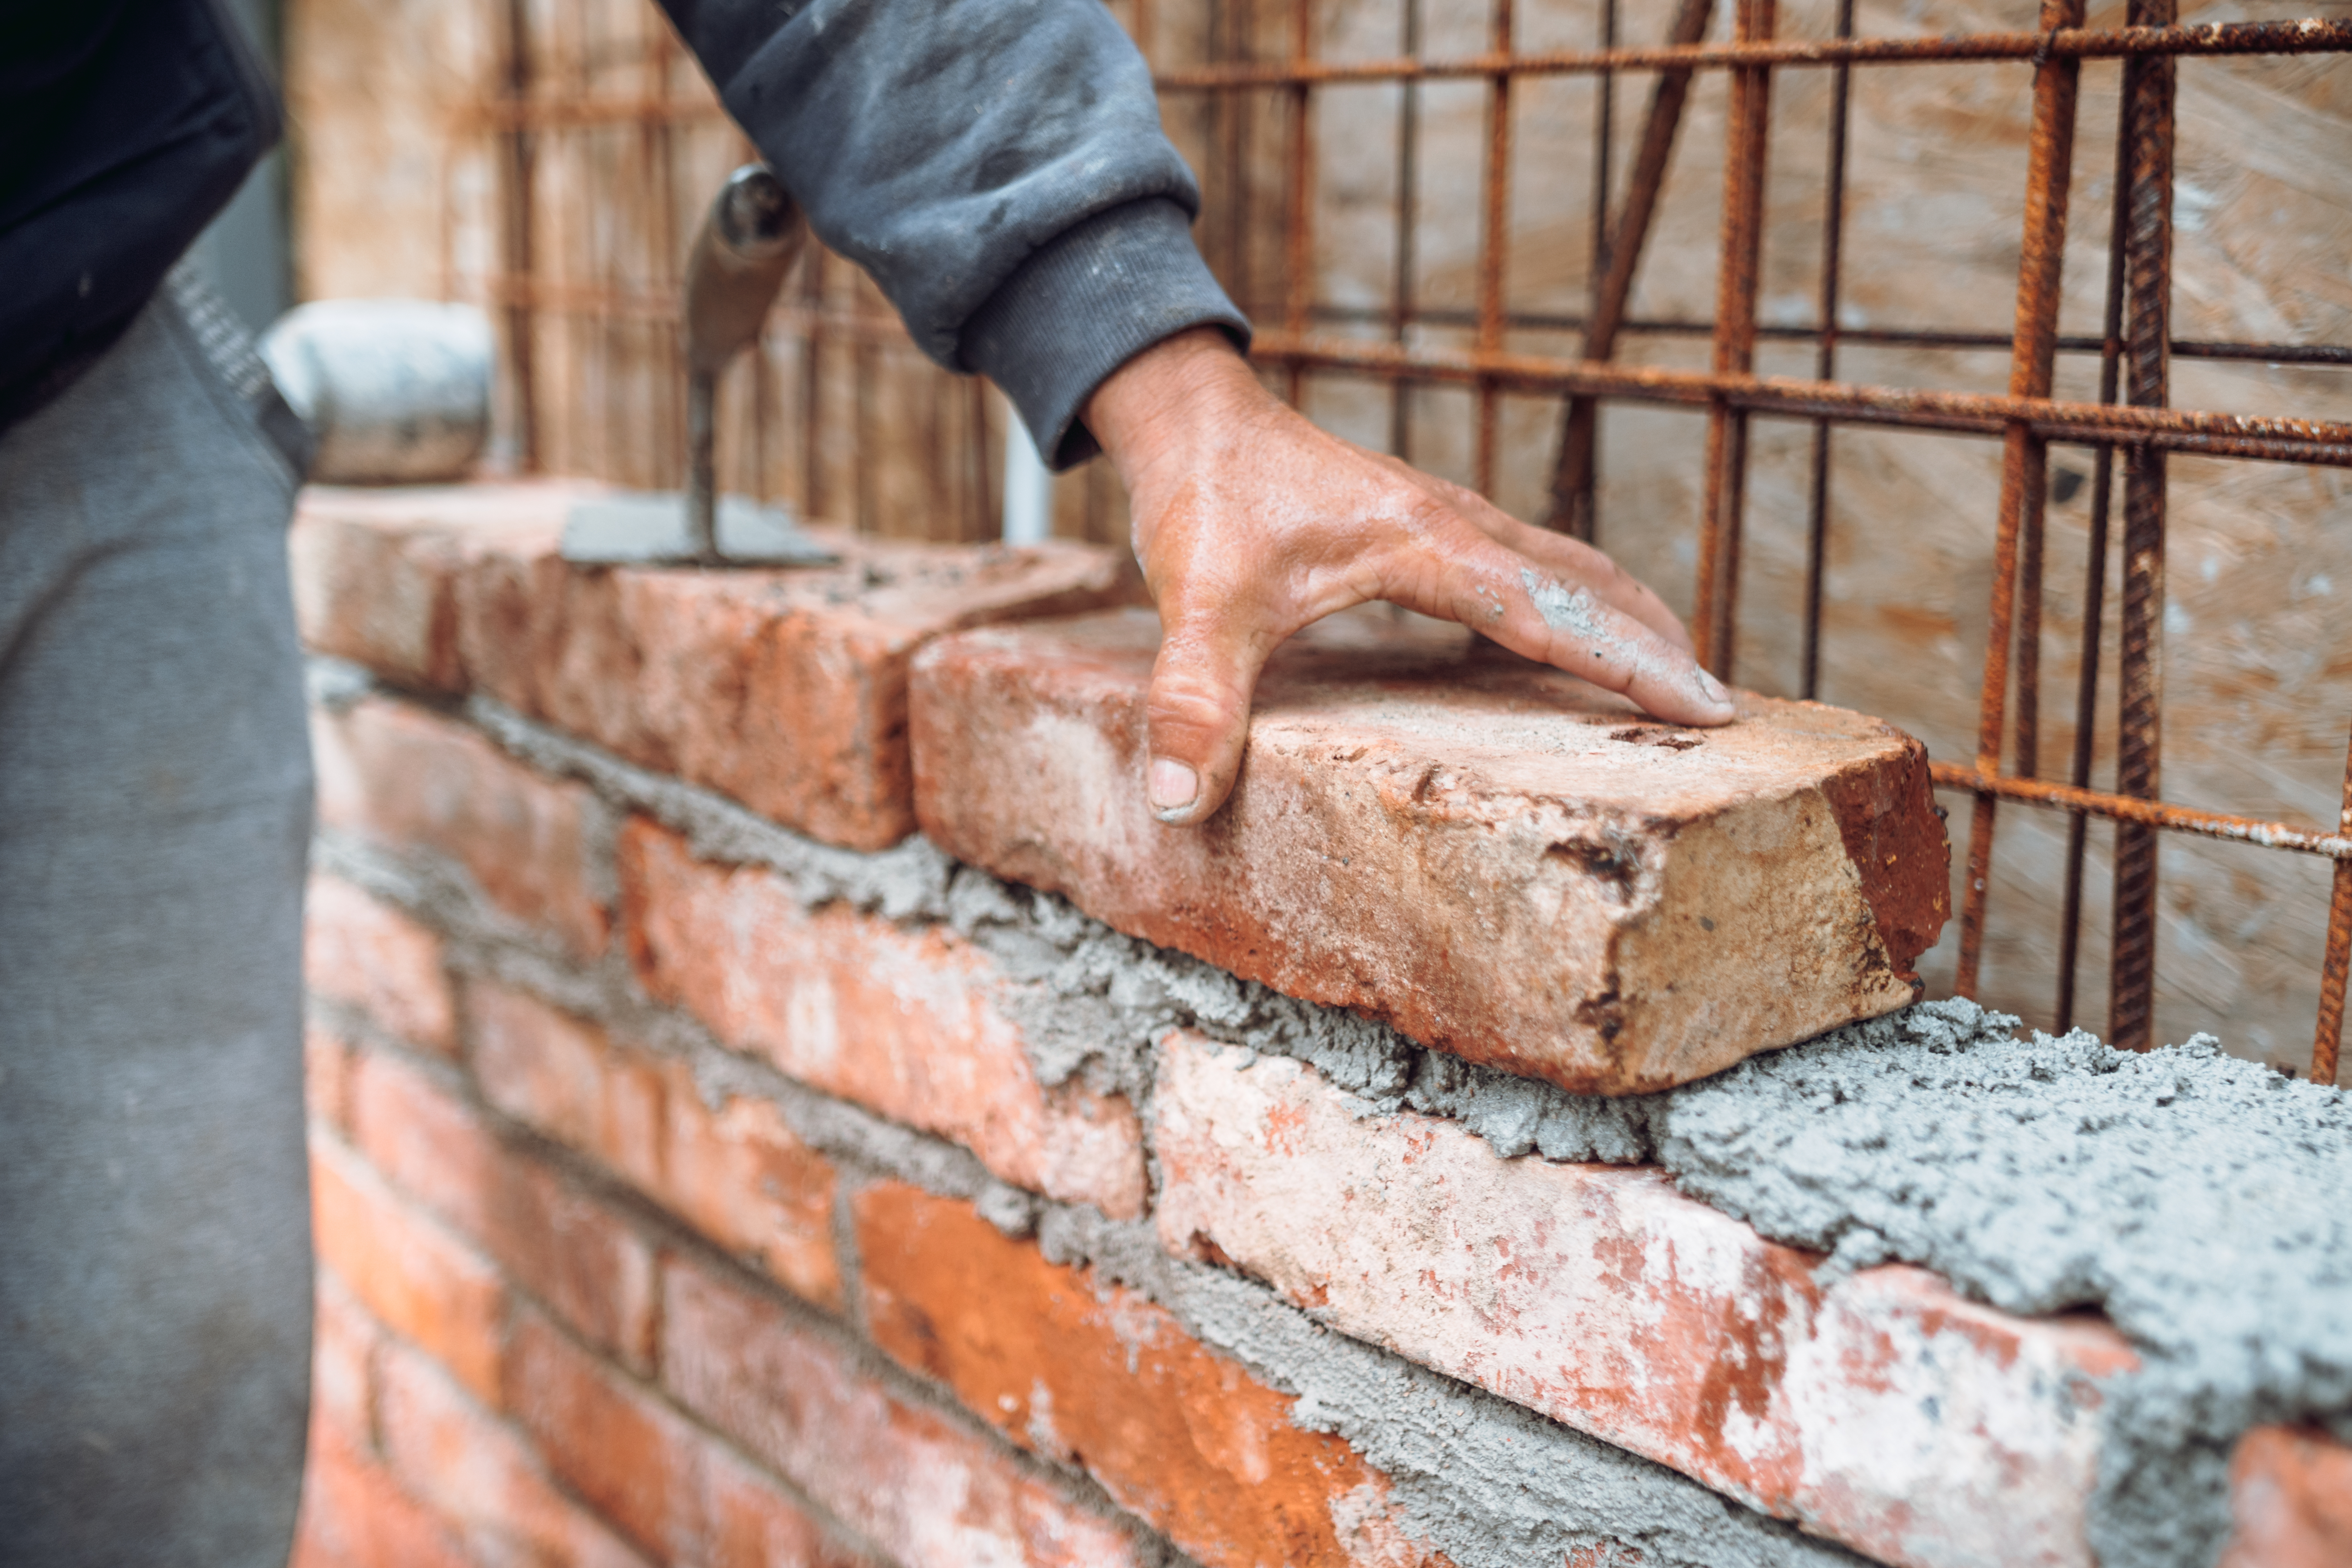 Bricklayer placing and adjusting bricks with mortar.